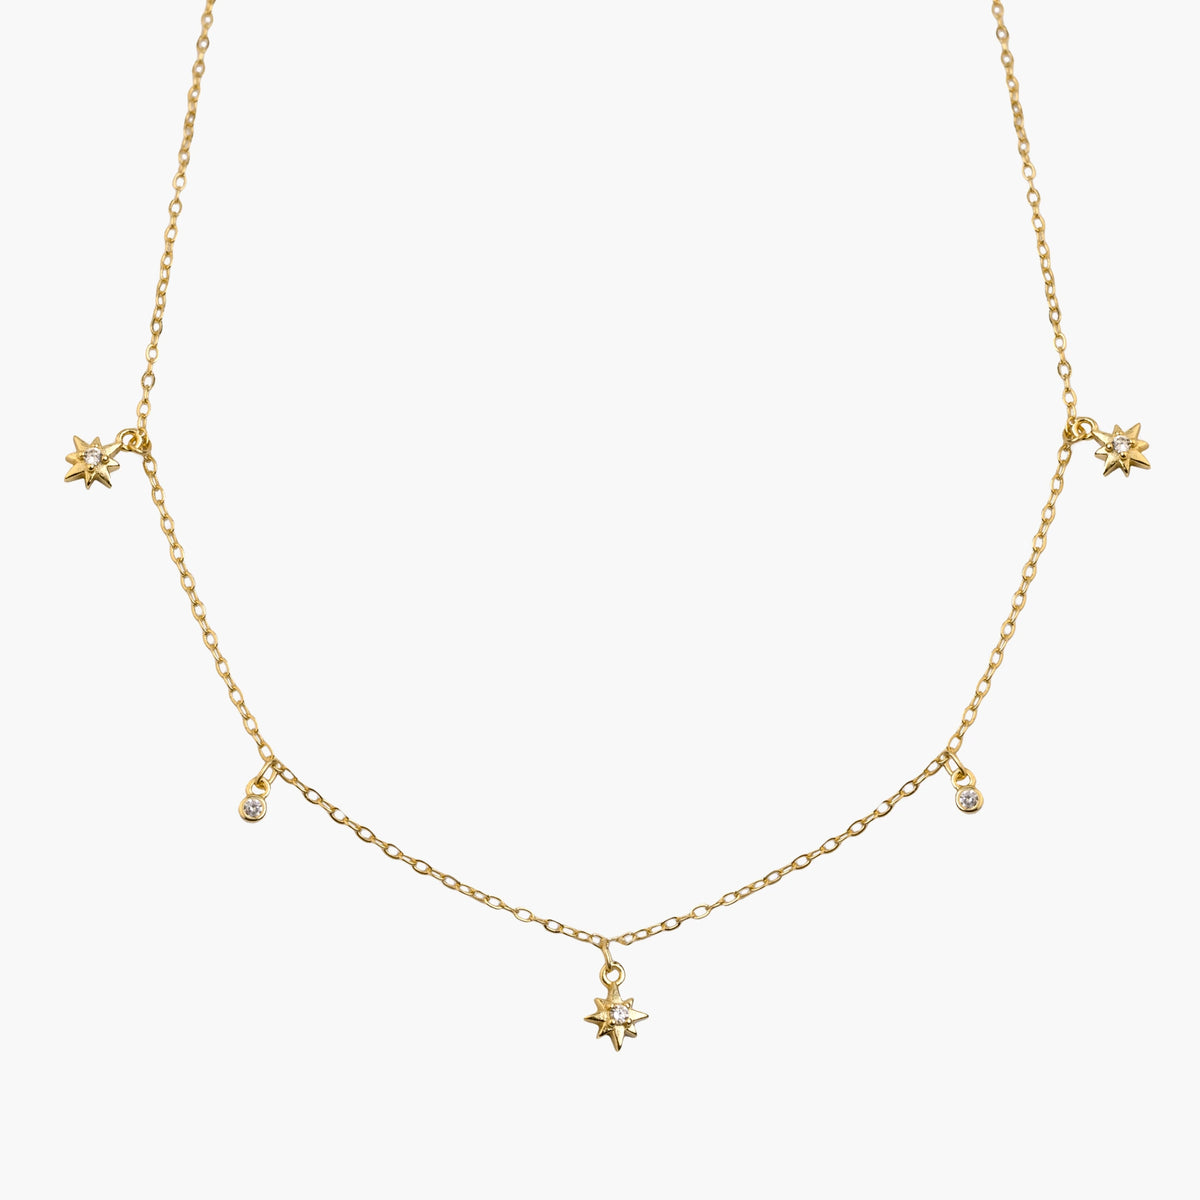 Necklace SARI | gold